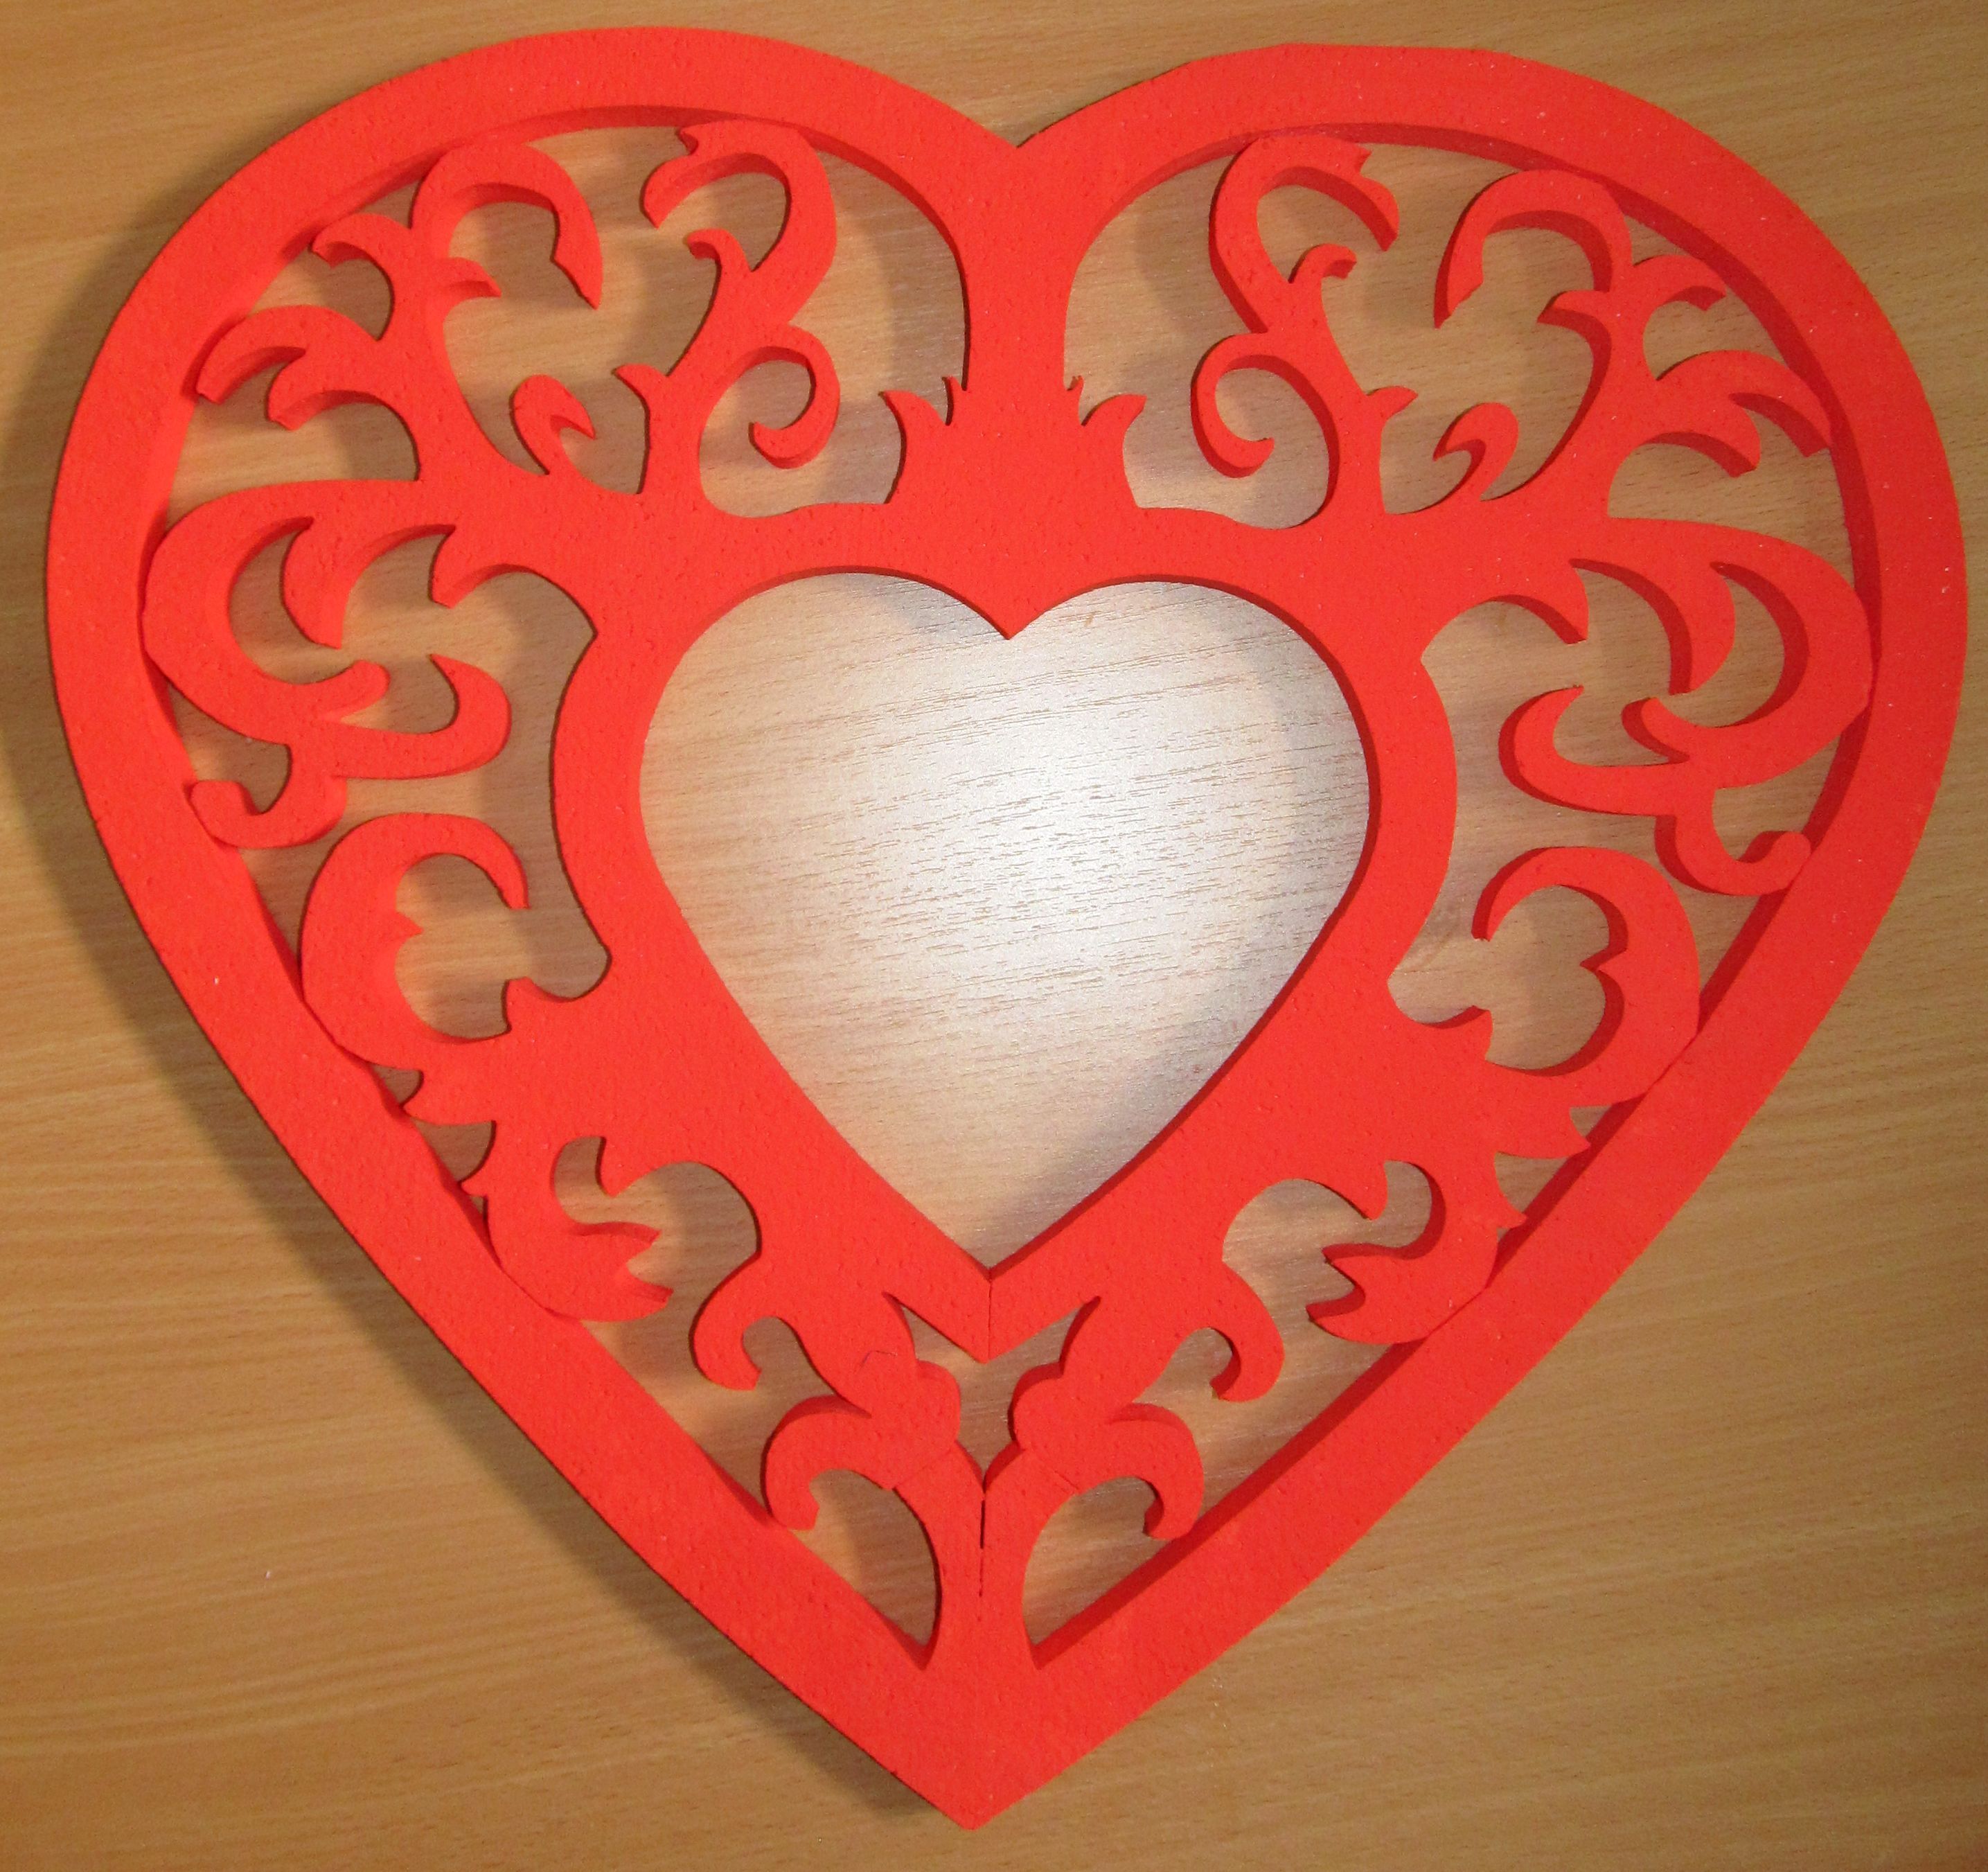 Декор сердечек из полистирола